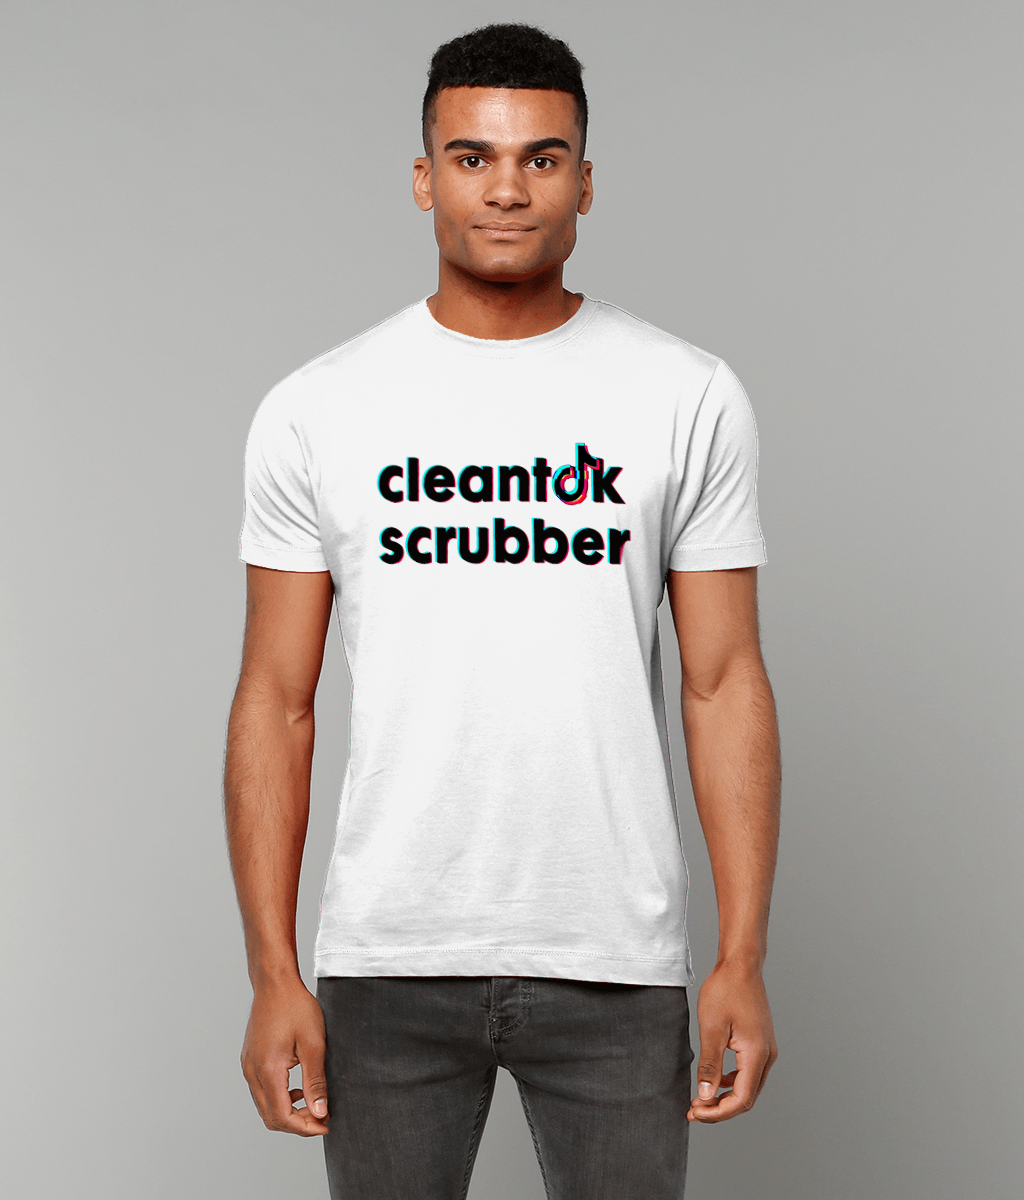 cleantok scrubber (black) unisex T-shirt S-5XL